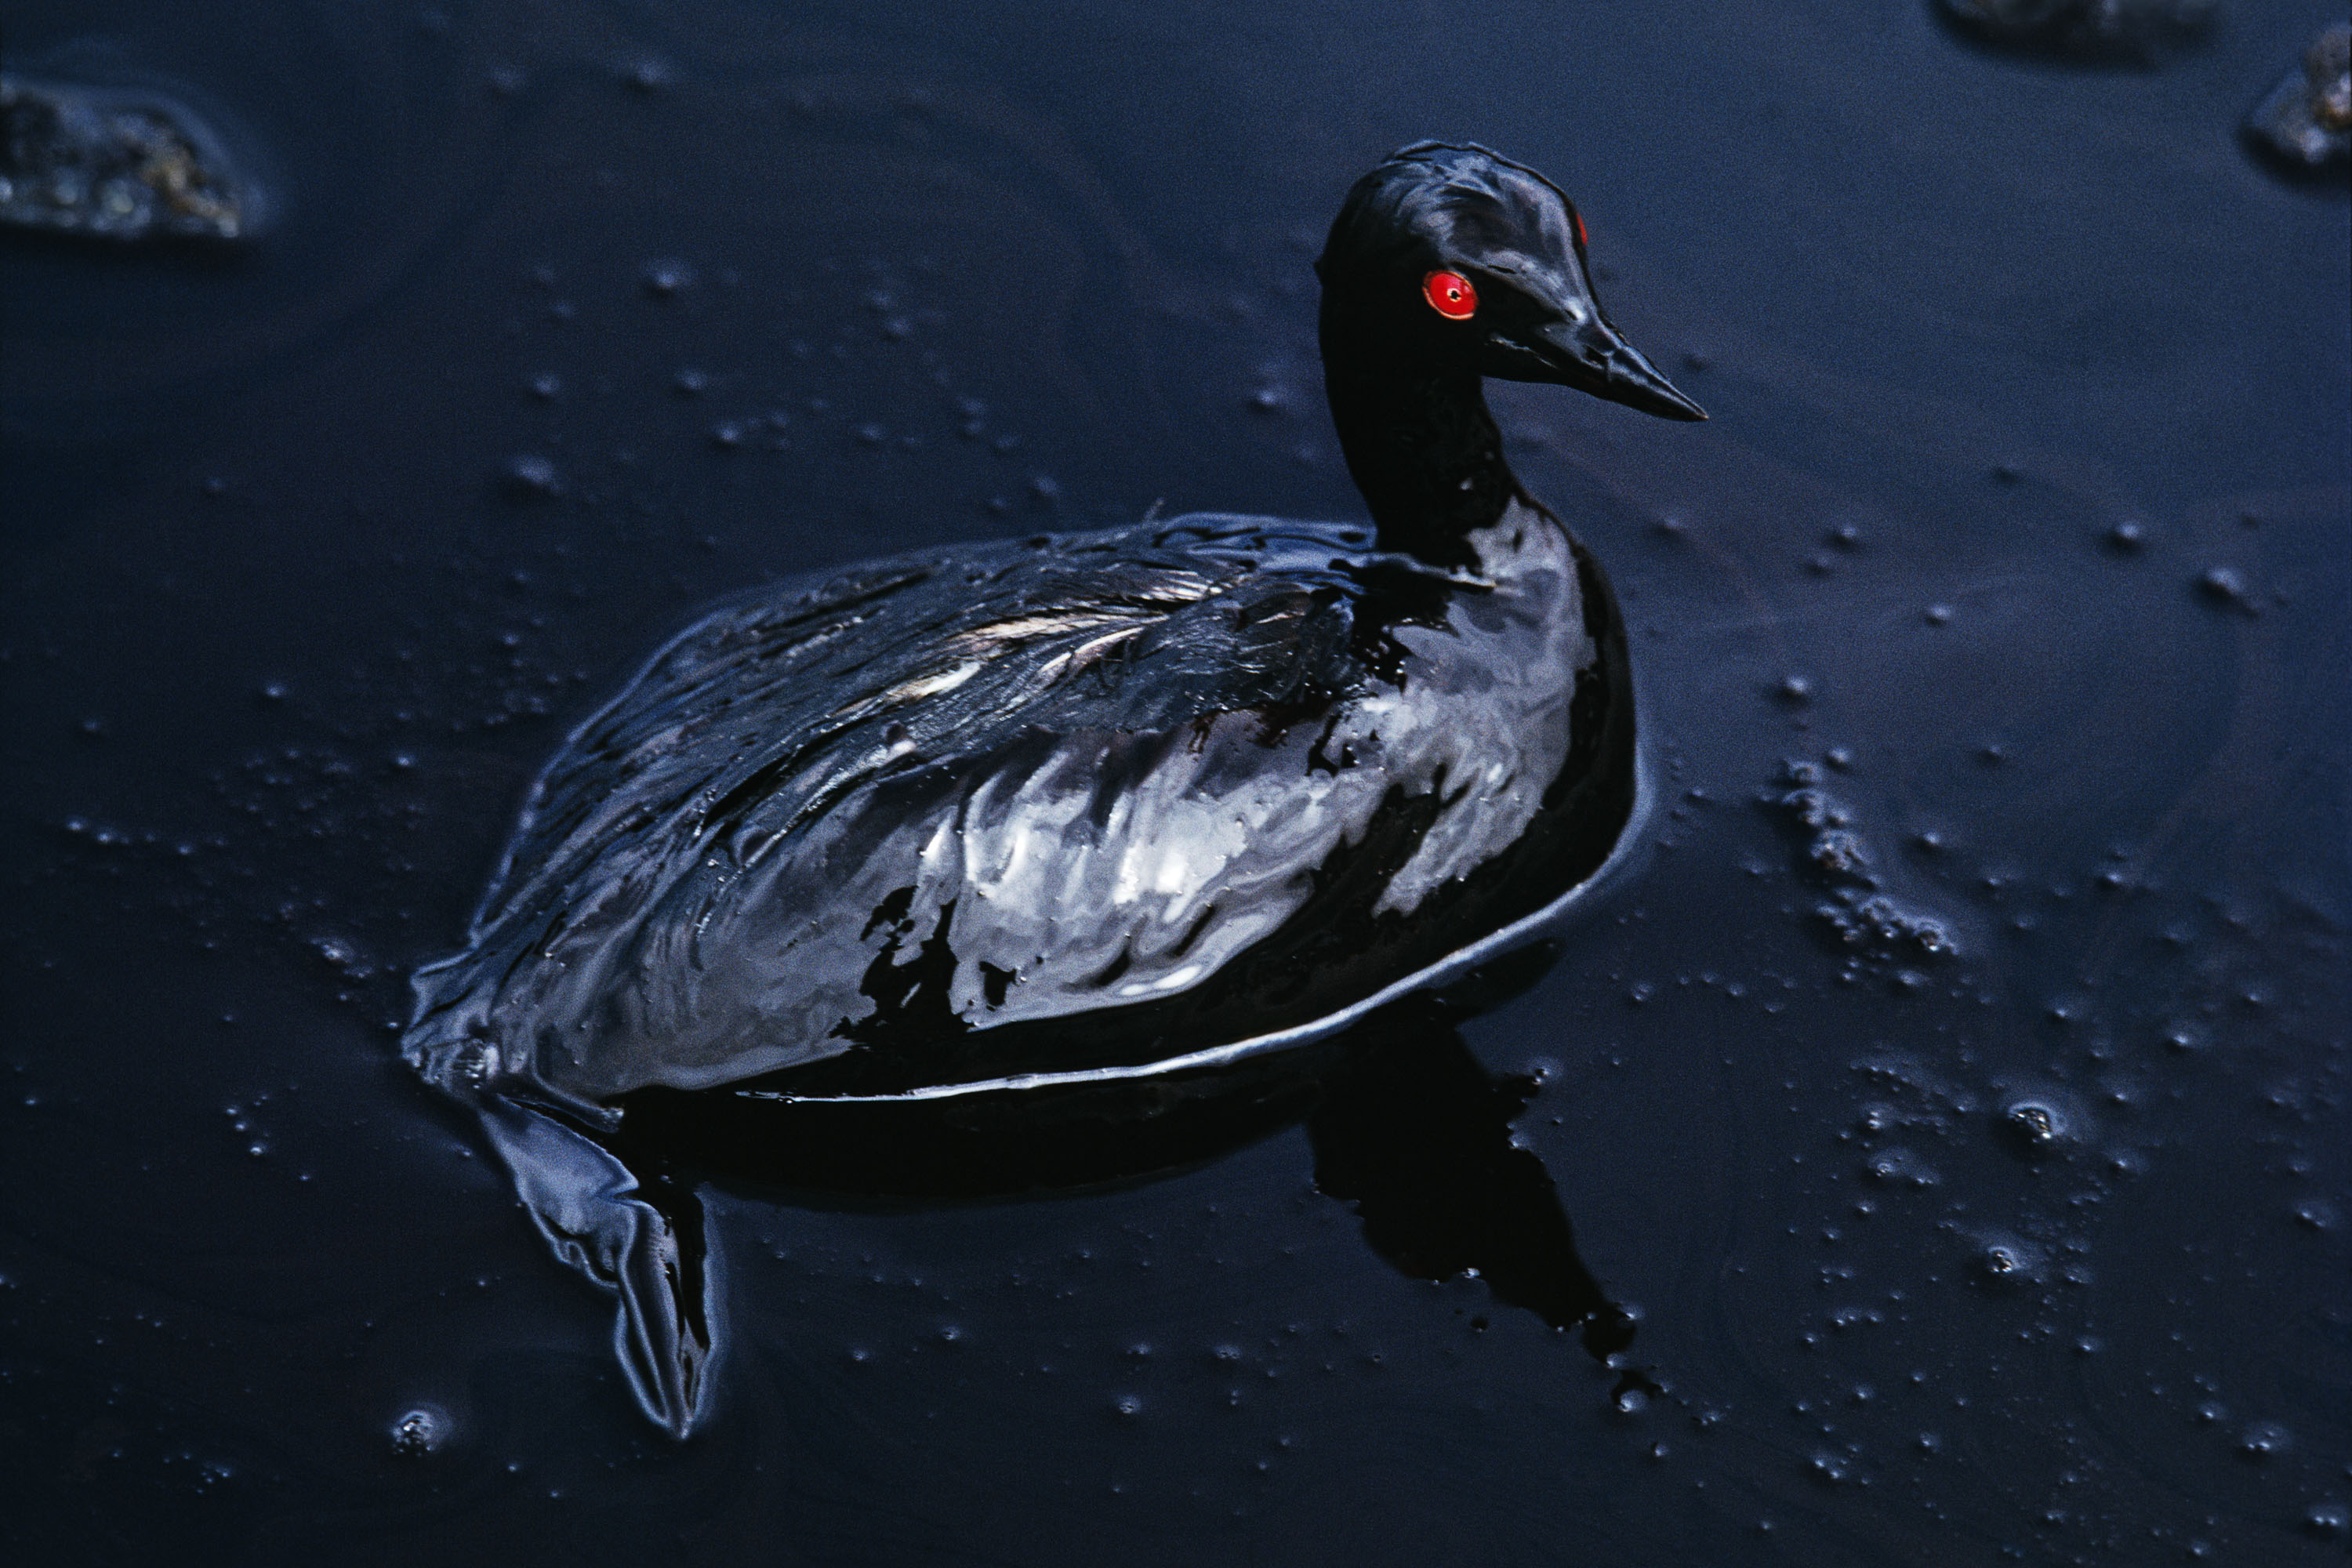 Steve McCurry, Bird dying in an oil spill off the coast of Saudi Arabia, 1991 Copyright Steve McCurry